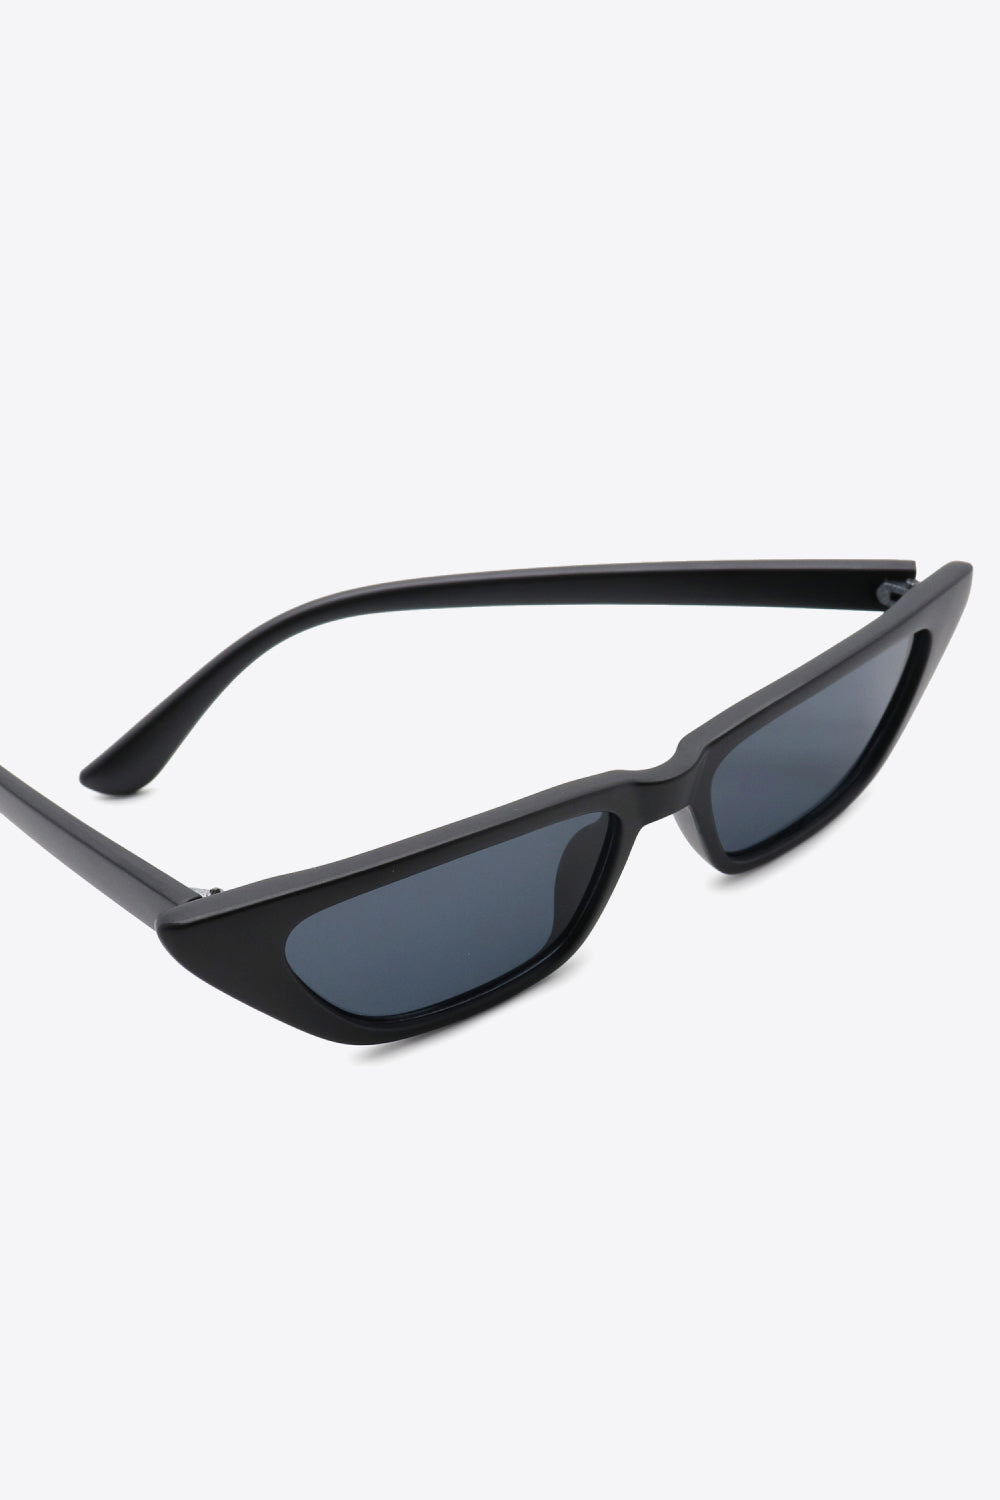 UV400 Polycarbonate Cat Eye Sunglasses Print on any thing USA/STOD clothes